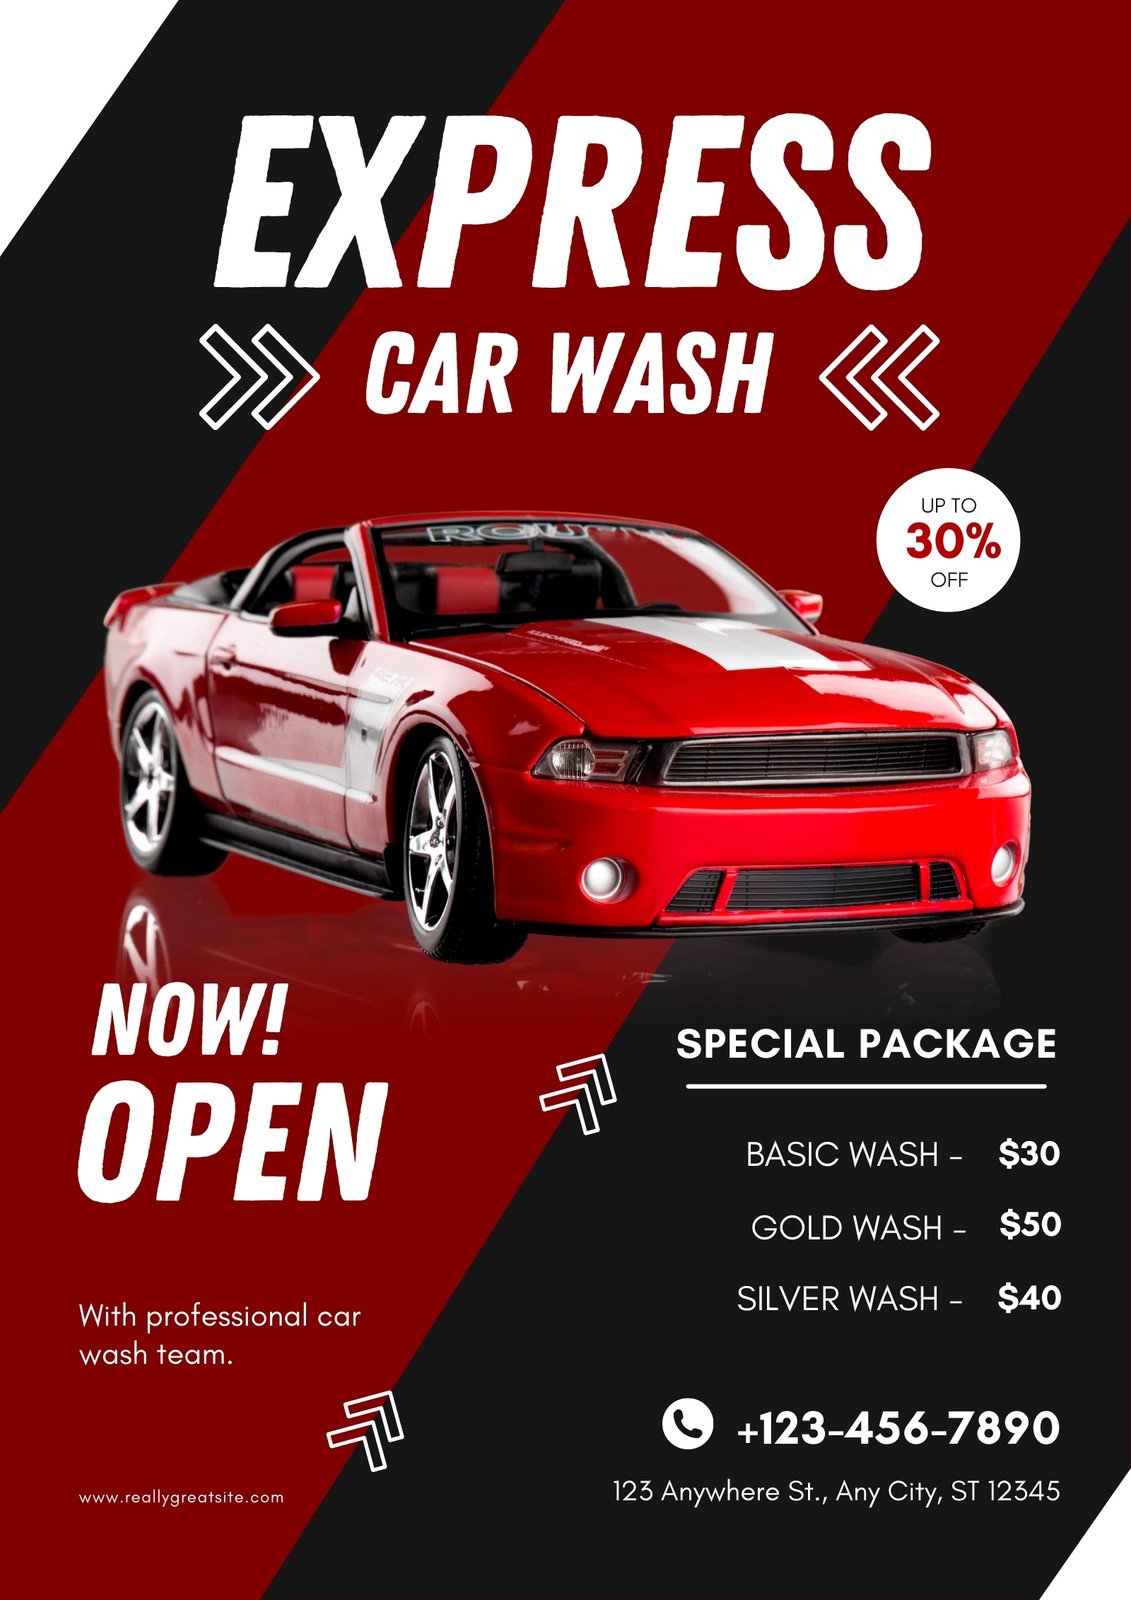 Request A FREE KleenBrite™ Liquid Car Wash Soap Sample